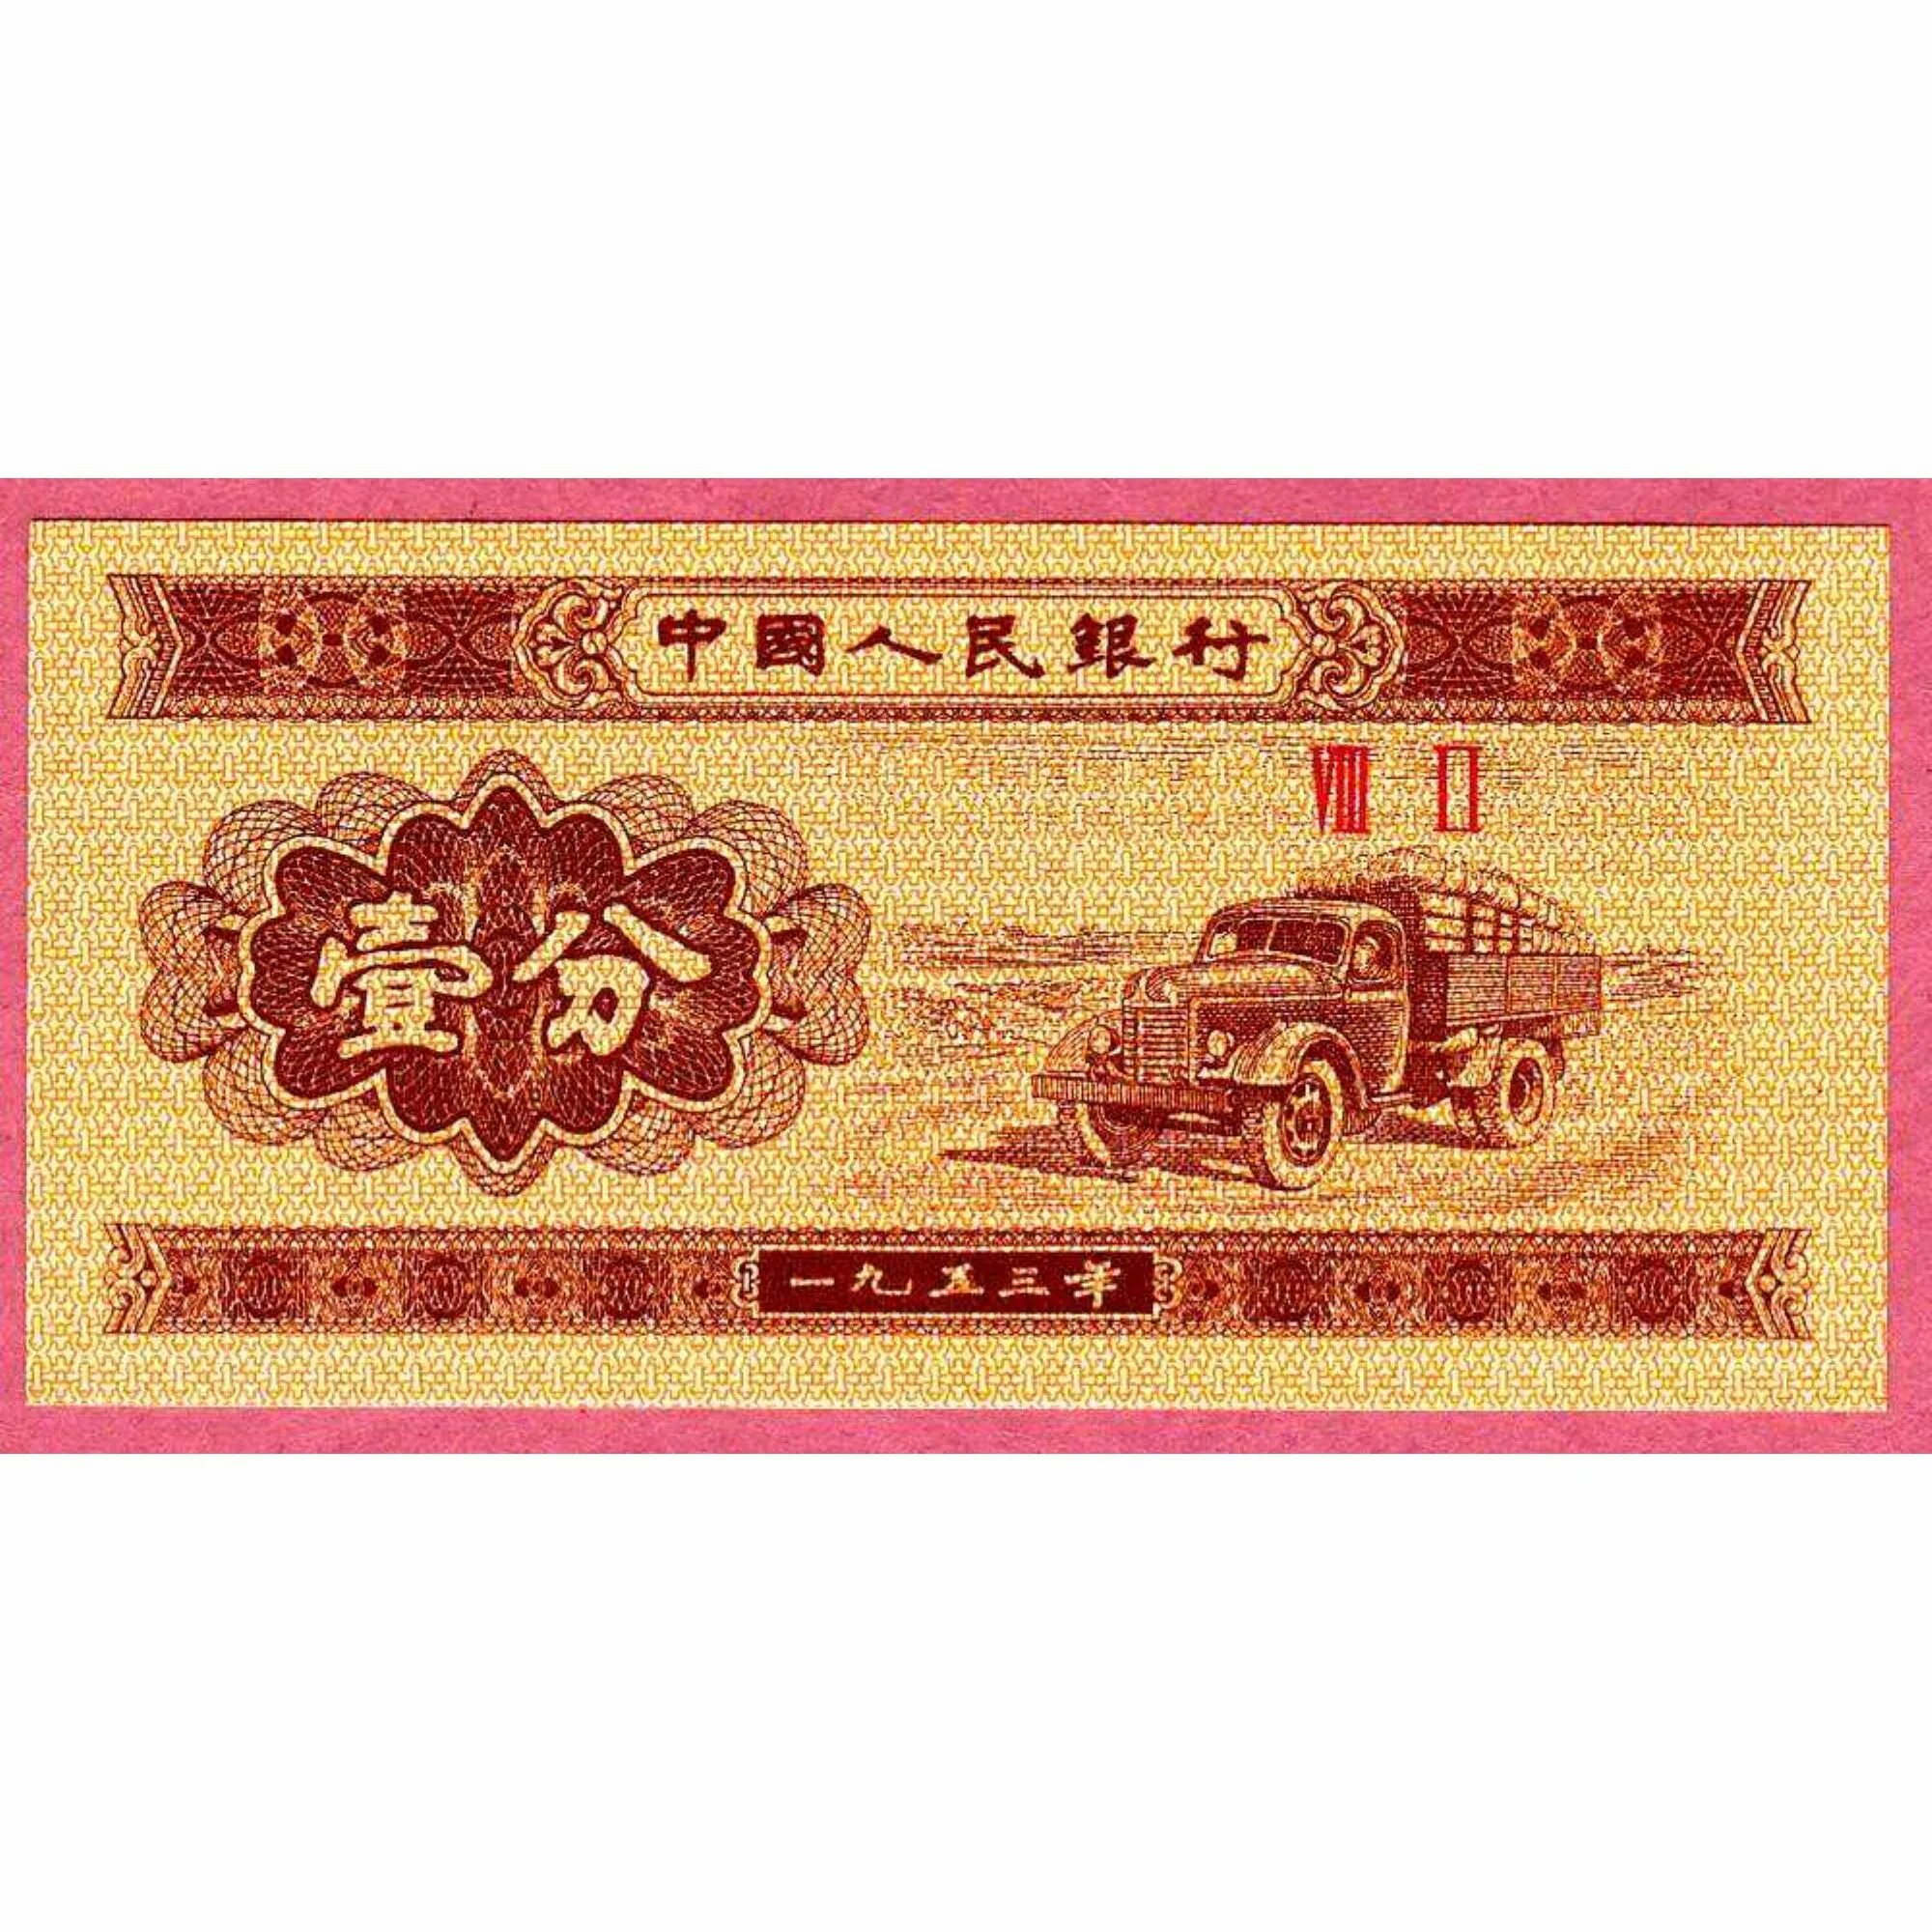 1 фень. Китай 1 Фень 1953 UNC. Китайский Фень. Банкнота Китая 1 фэнь 1953 ..